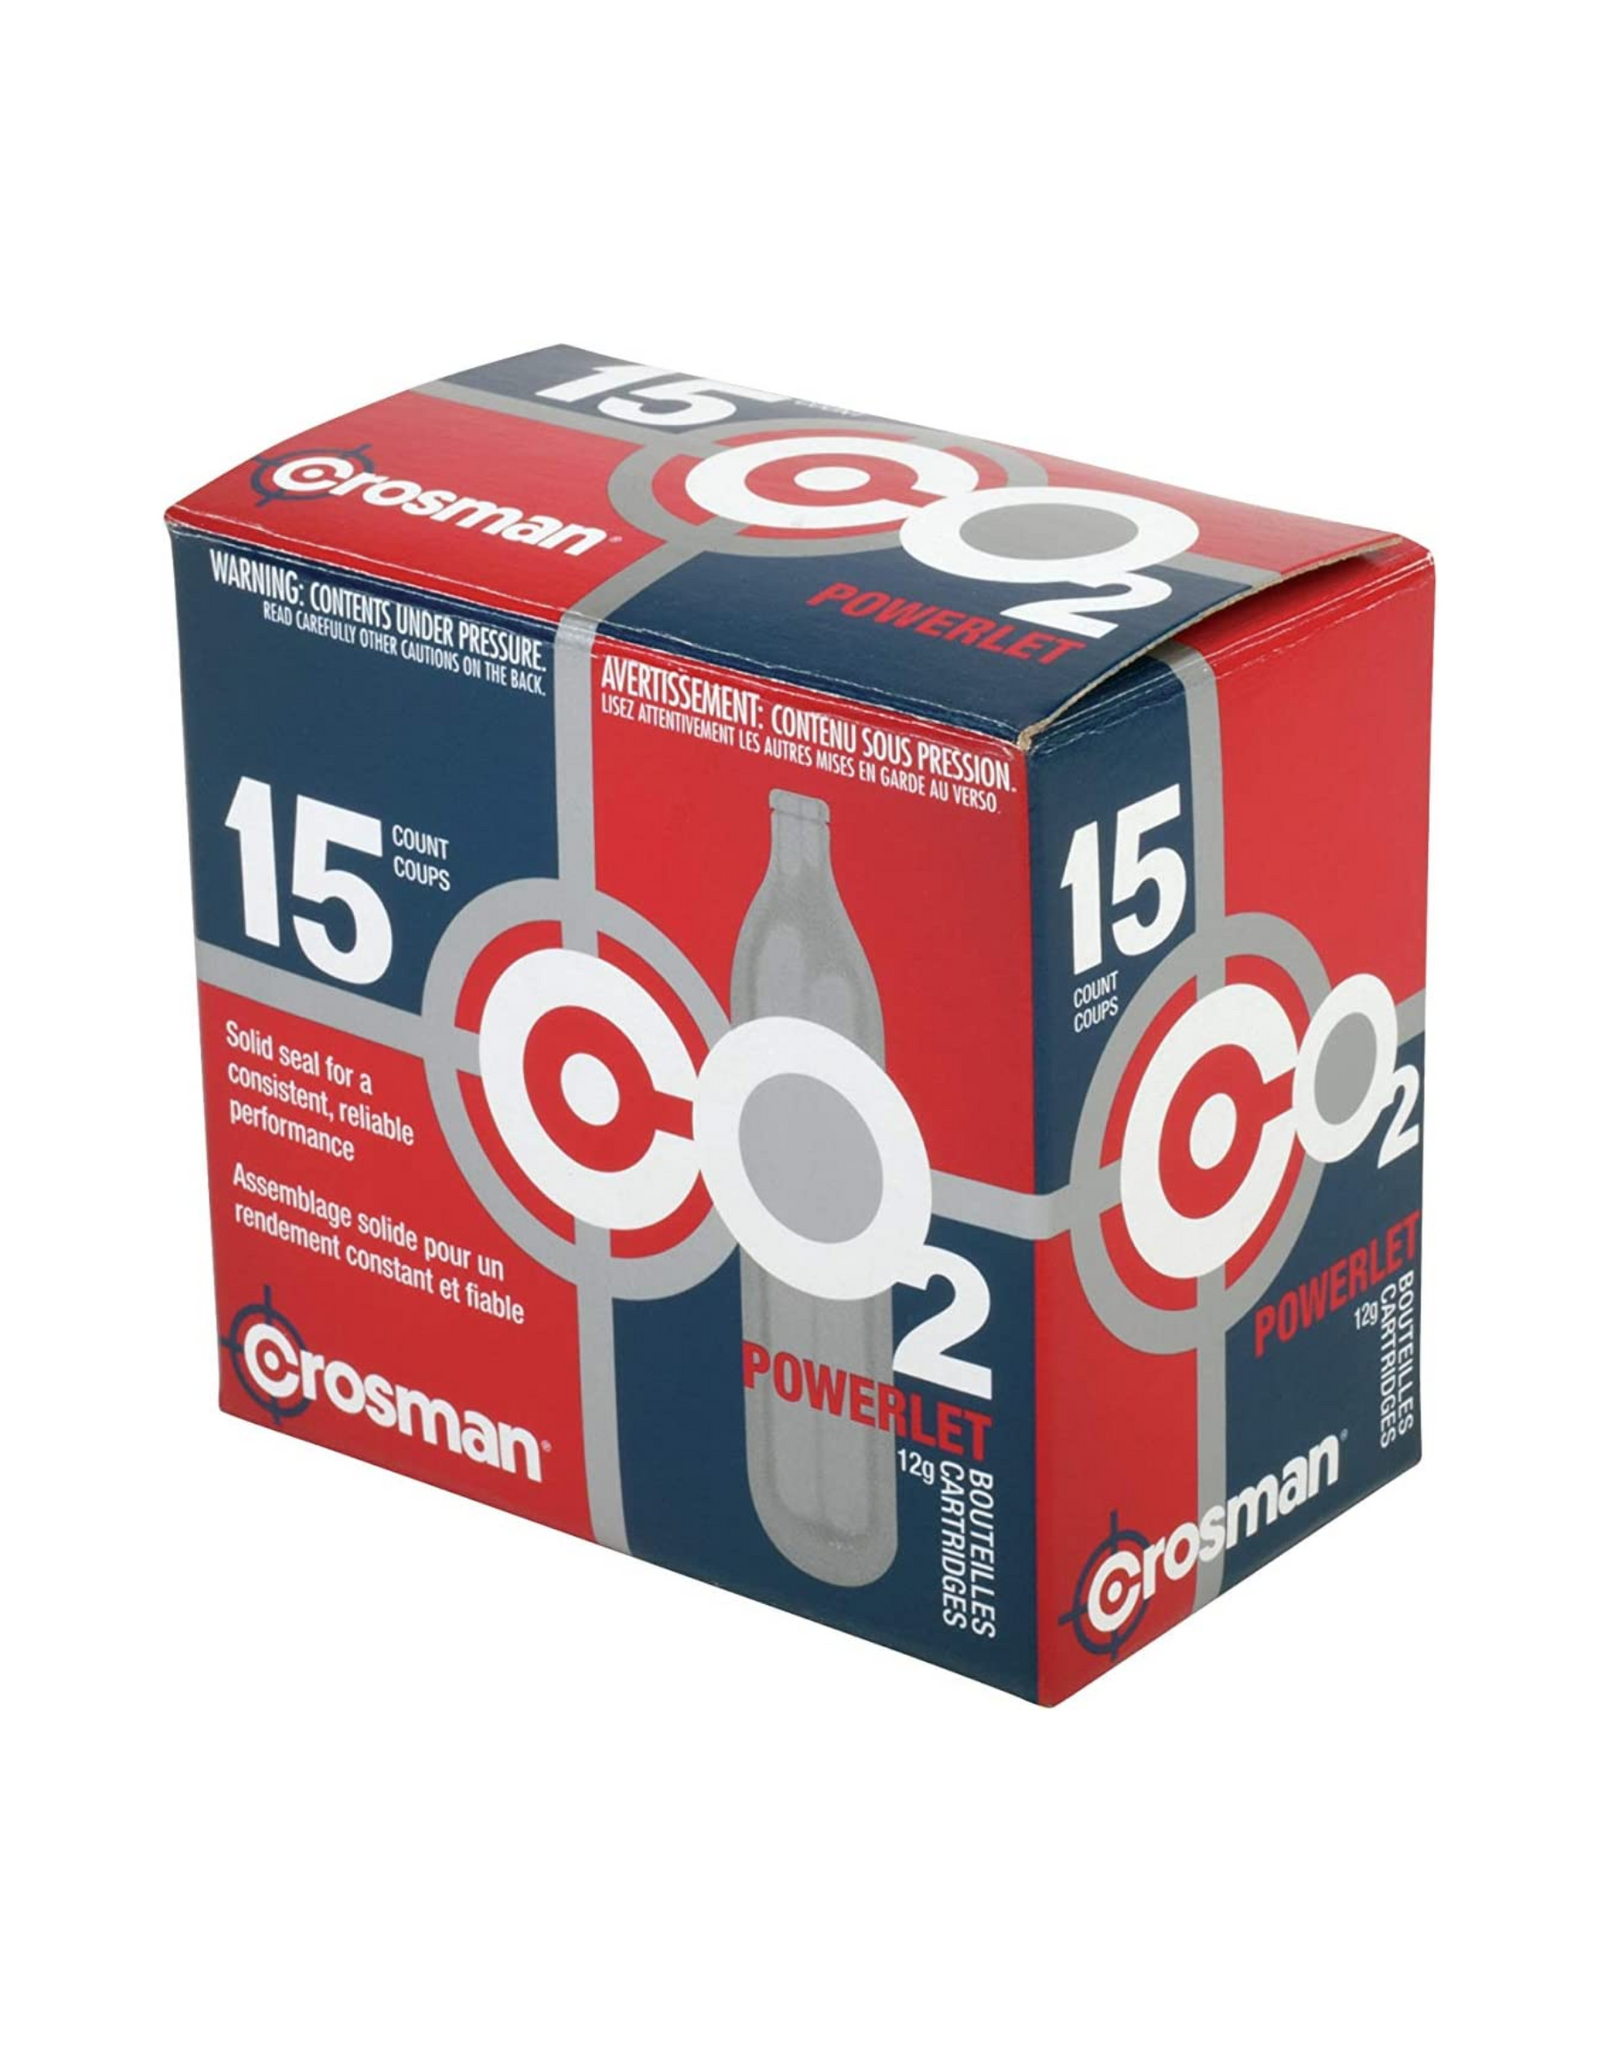 Crosman 12-Gram CO2 Powerlet Cartridges For Air Rifles And Air Pistols, 15 Ct